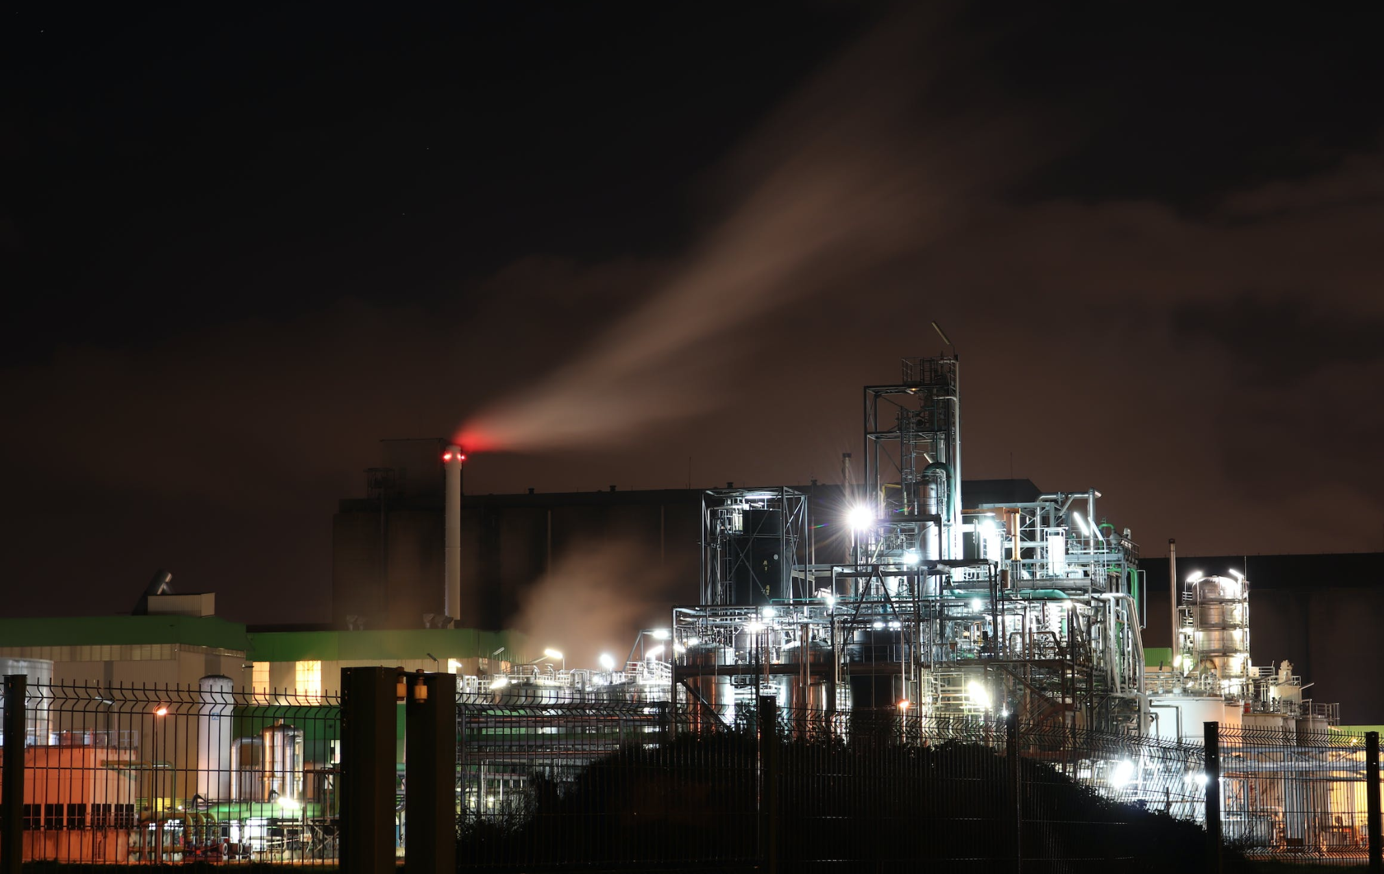 Industrial building at night; image by Loïc Manegarium, via Pexels.com.